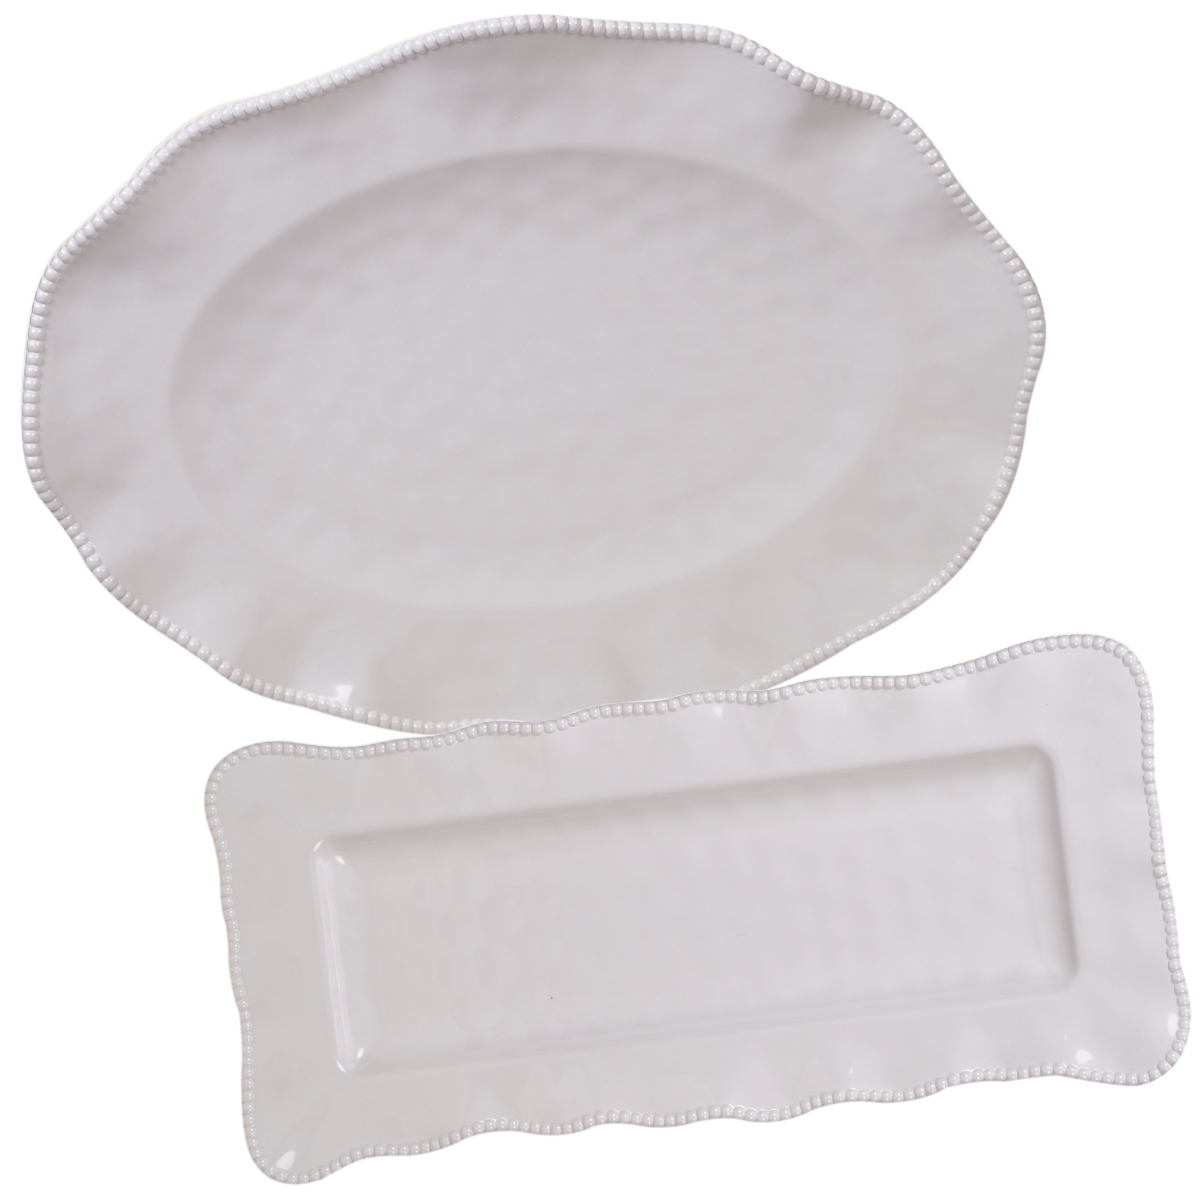 Perlette Cream Melamine 2-Pc. Platter Set - Rectangular and Oval - Cream